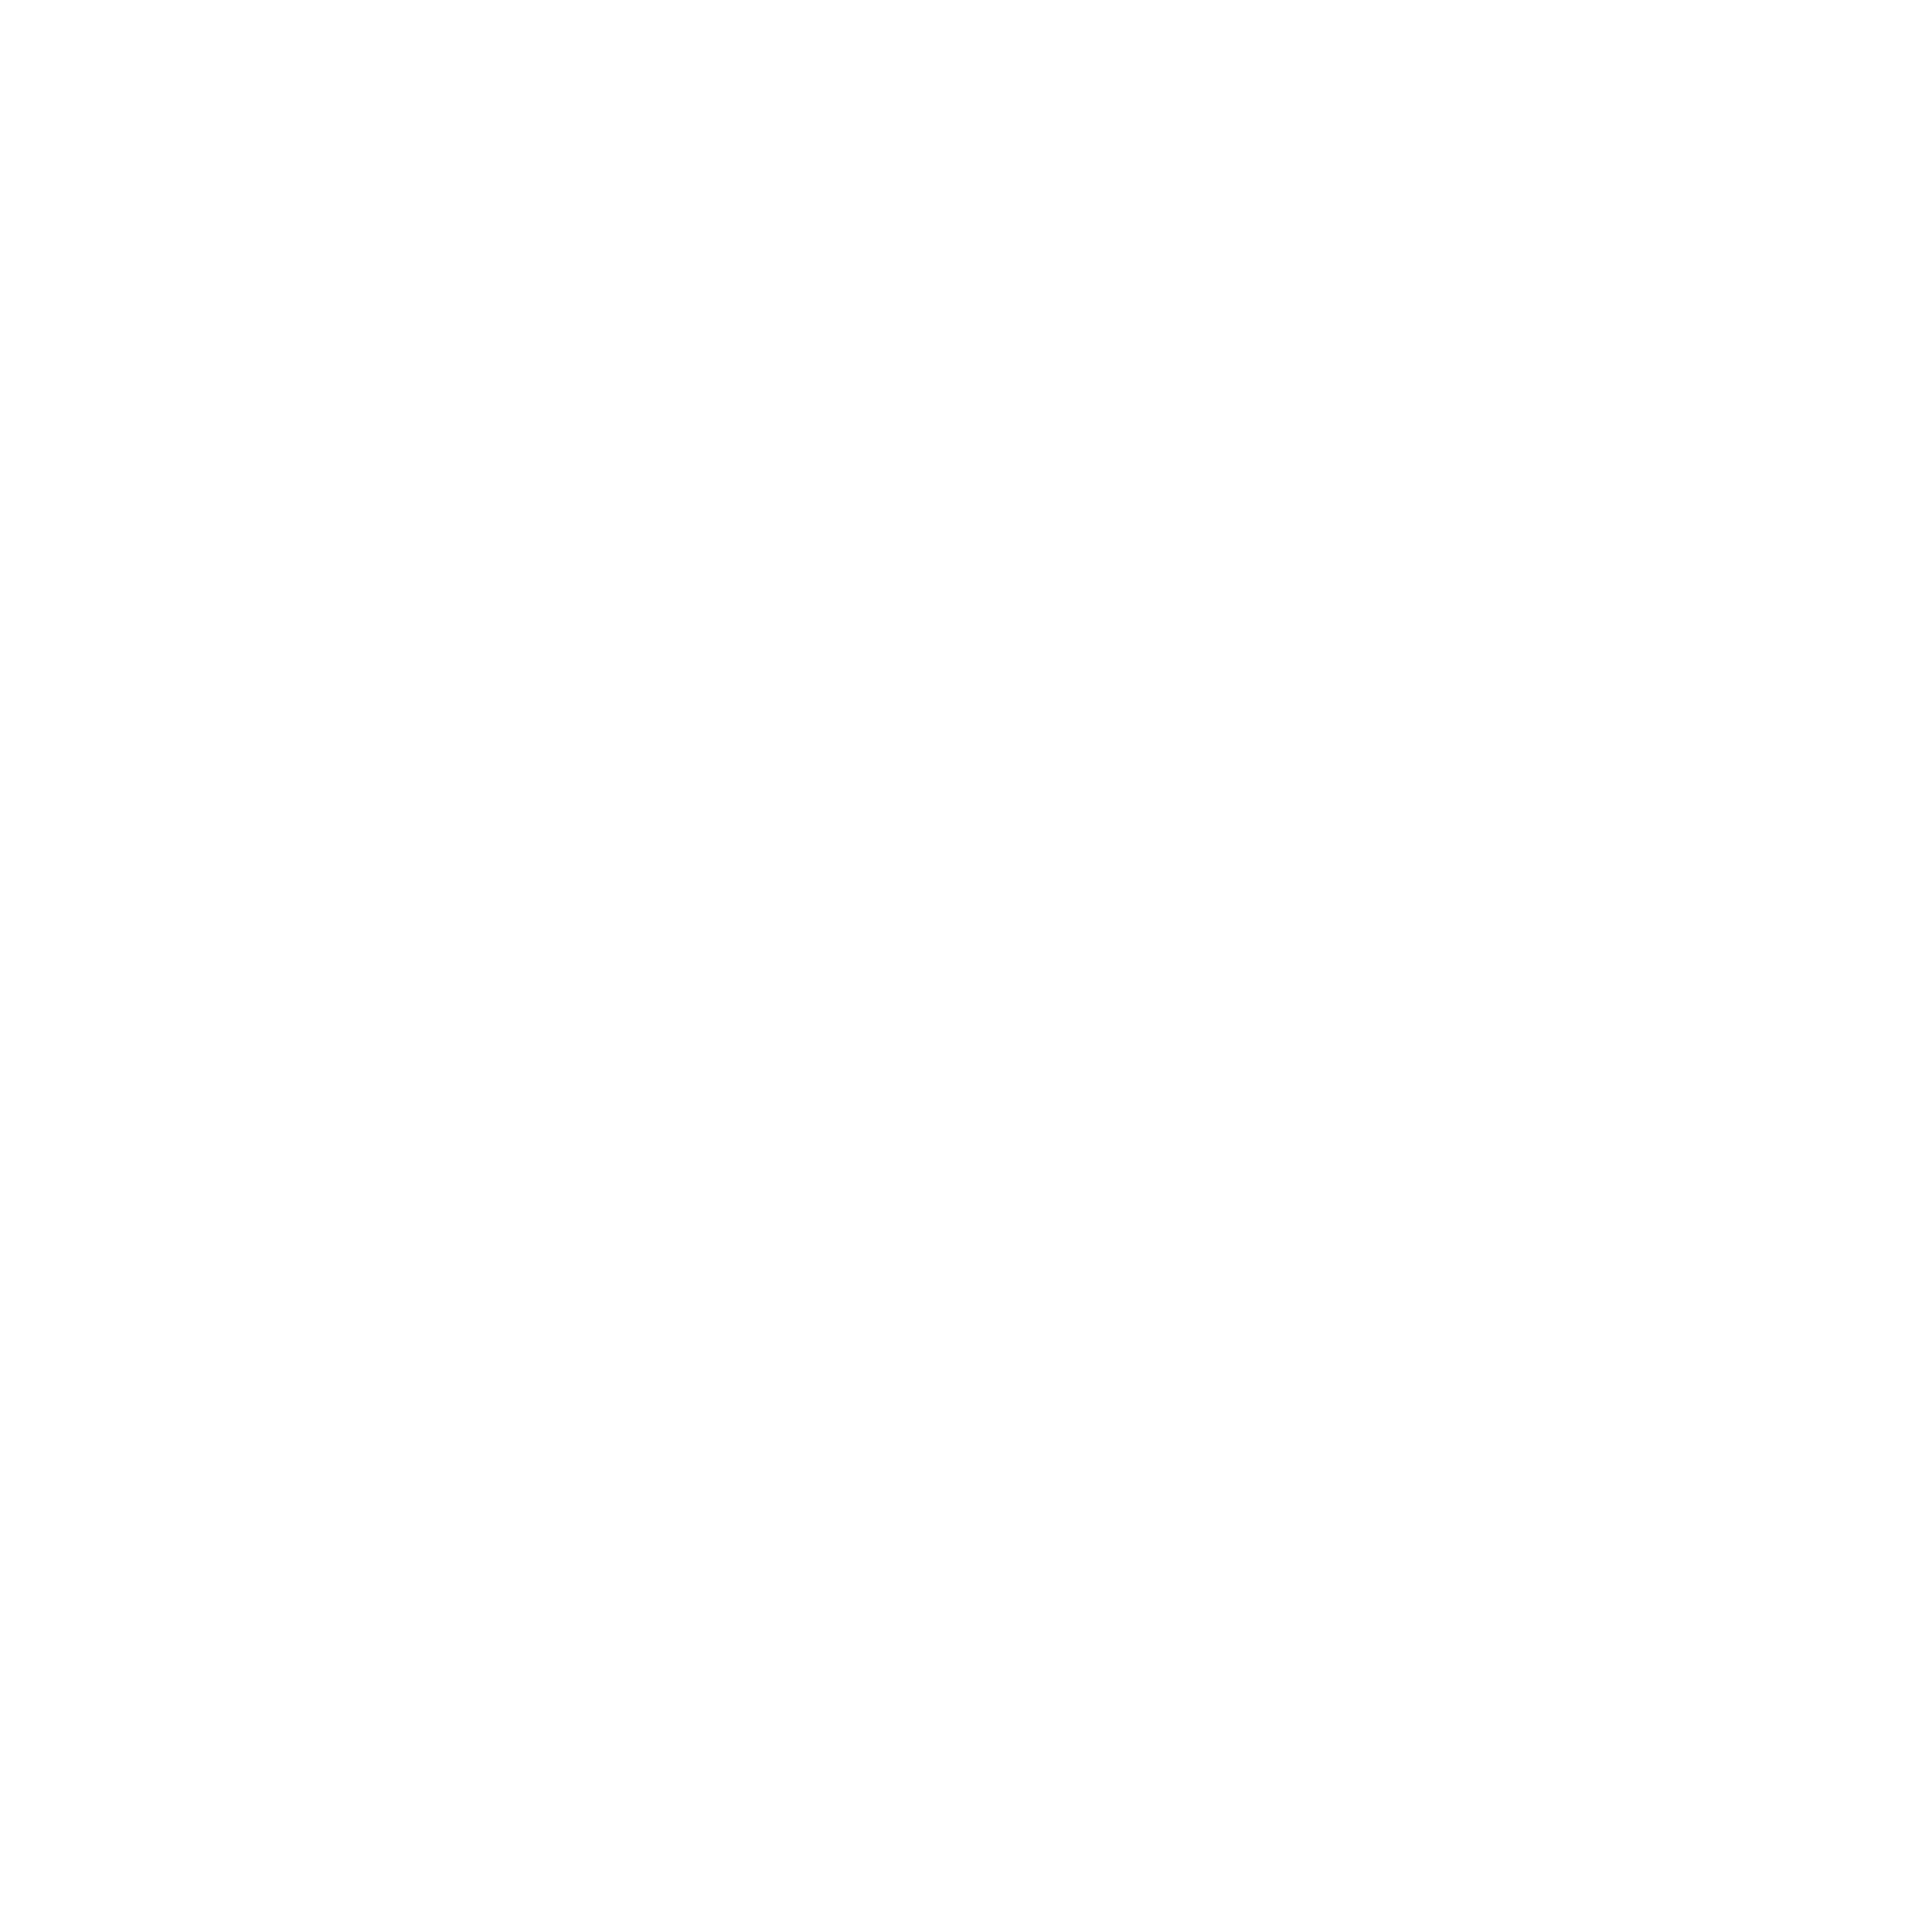 SYNNEX Logo - Synnex Logo PNG Transparent & SVG Vector - Freebie Supply